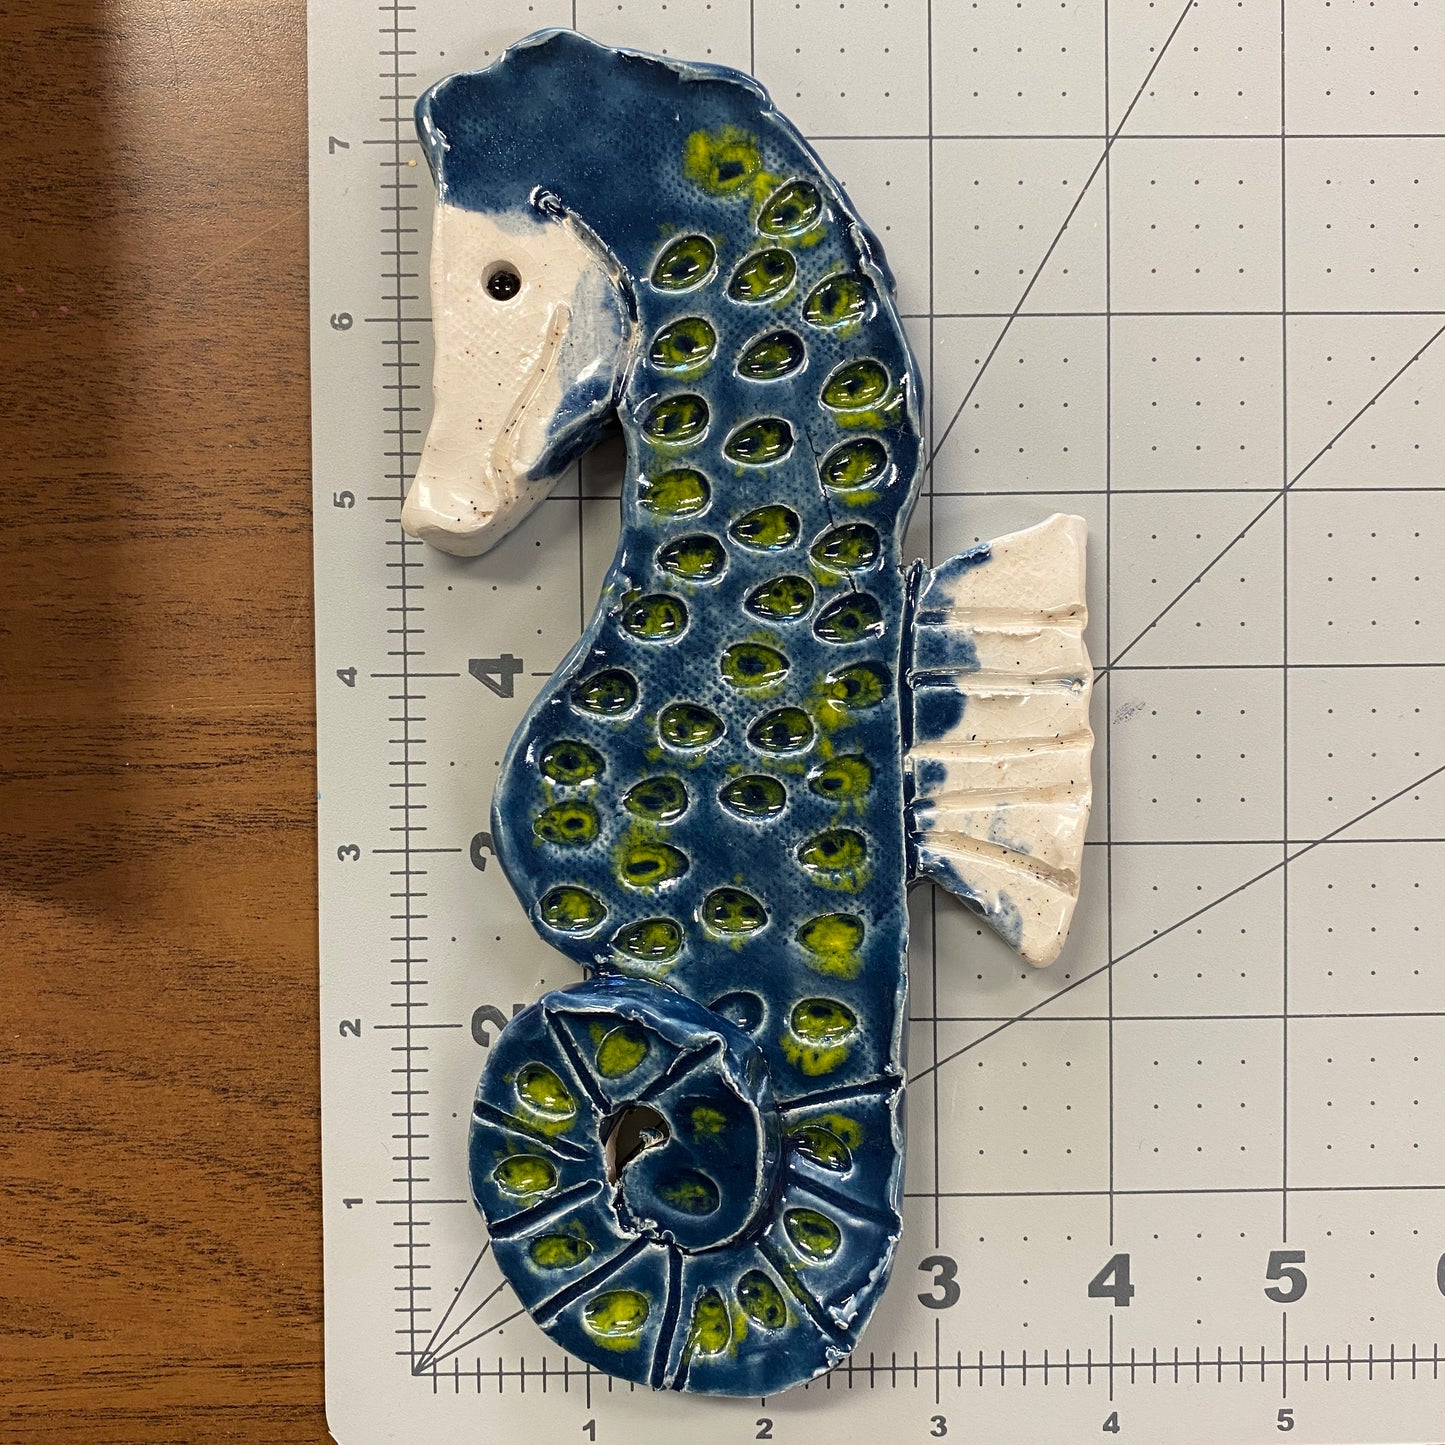 Ceramic Arts Handmade Clay Crafts Fresh Fish Glazed 7.5-inch x 4-inch Seahorse made by Lisa Uptain